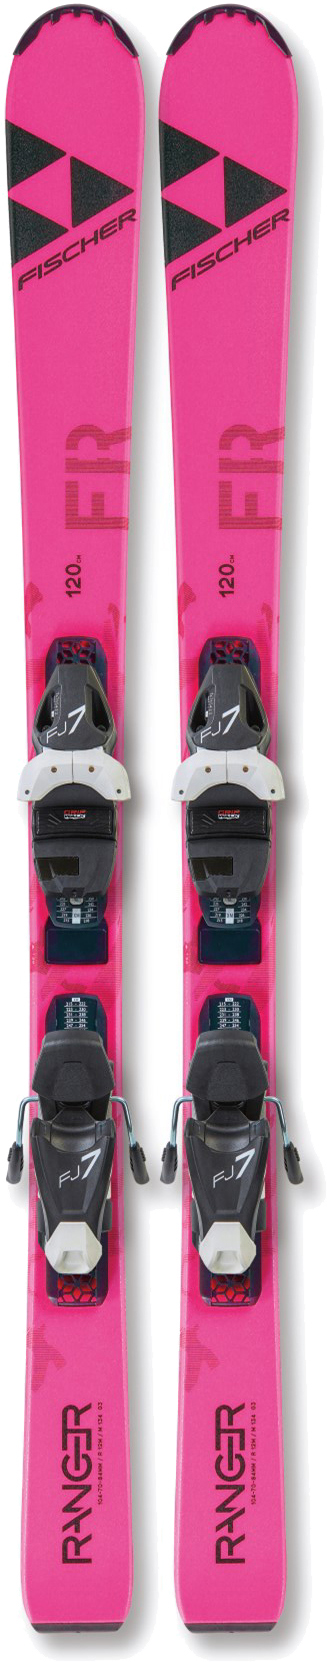 Лыжи Fischer Ranger Fr Jr Slr Pro 110 см